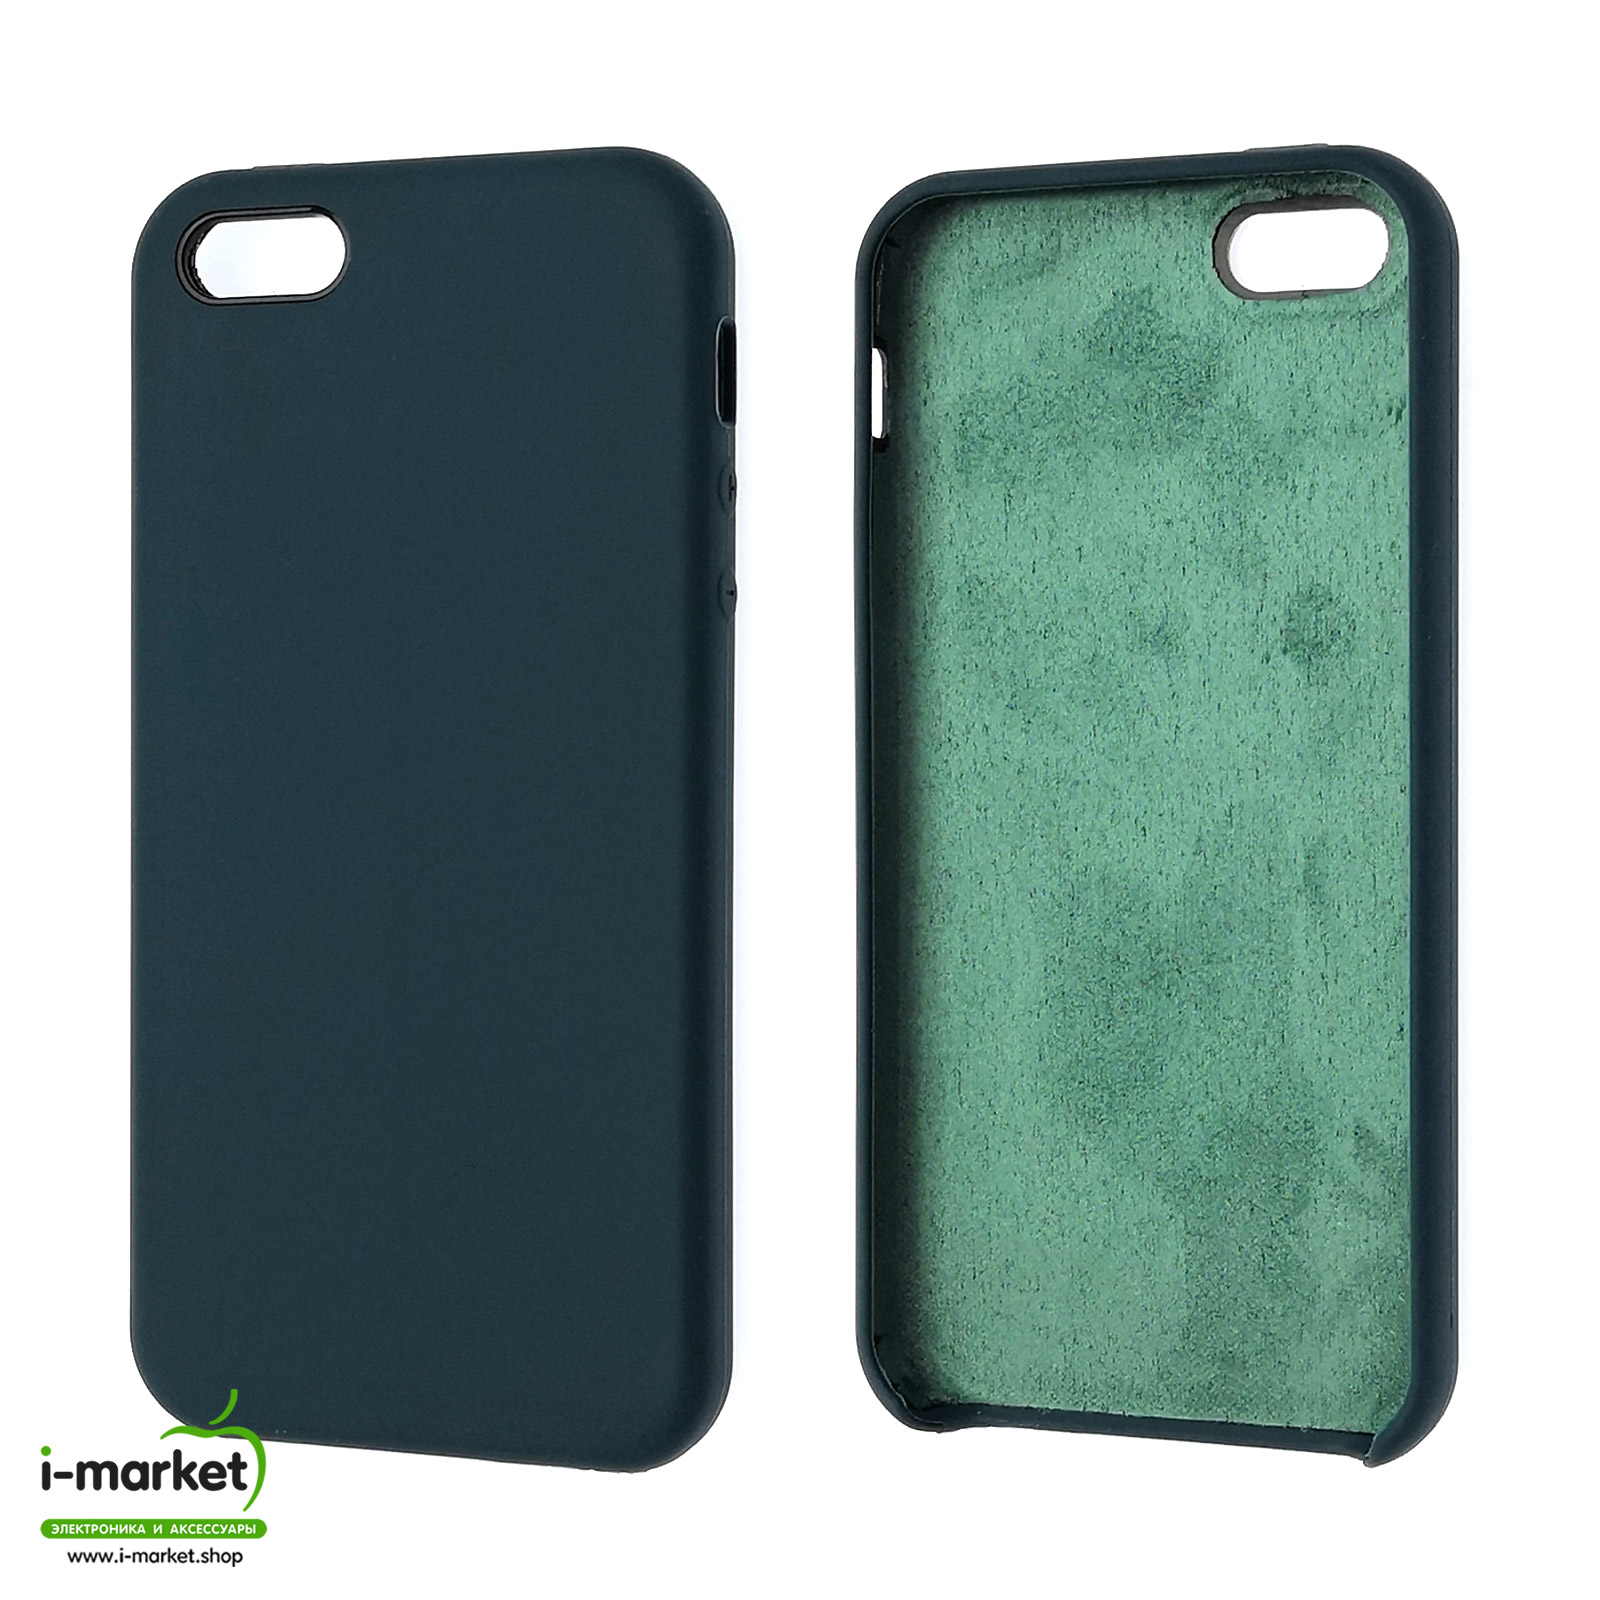 Чехол накладка Silicon Case для APPLE iPhone 5, 5S, SE, силикон, бархат, цвет темно синий